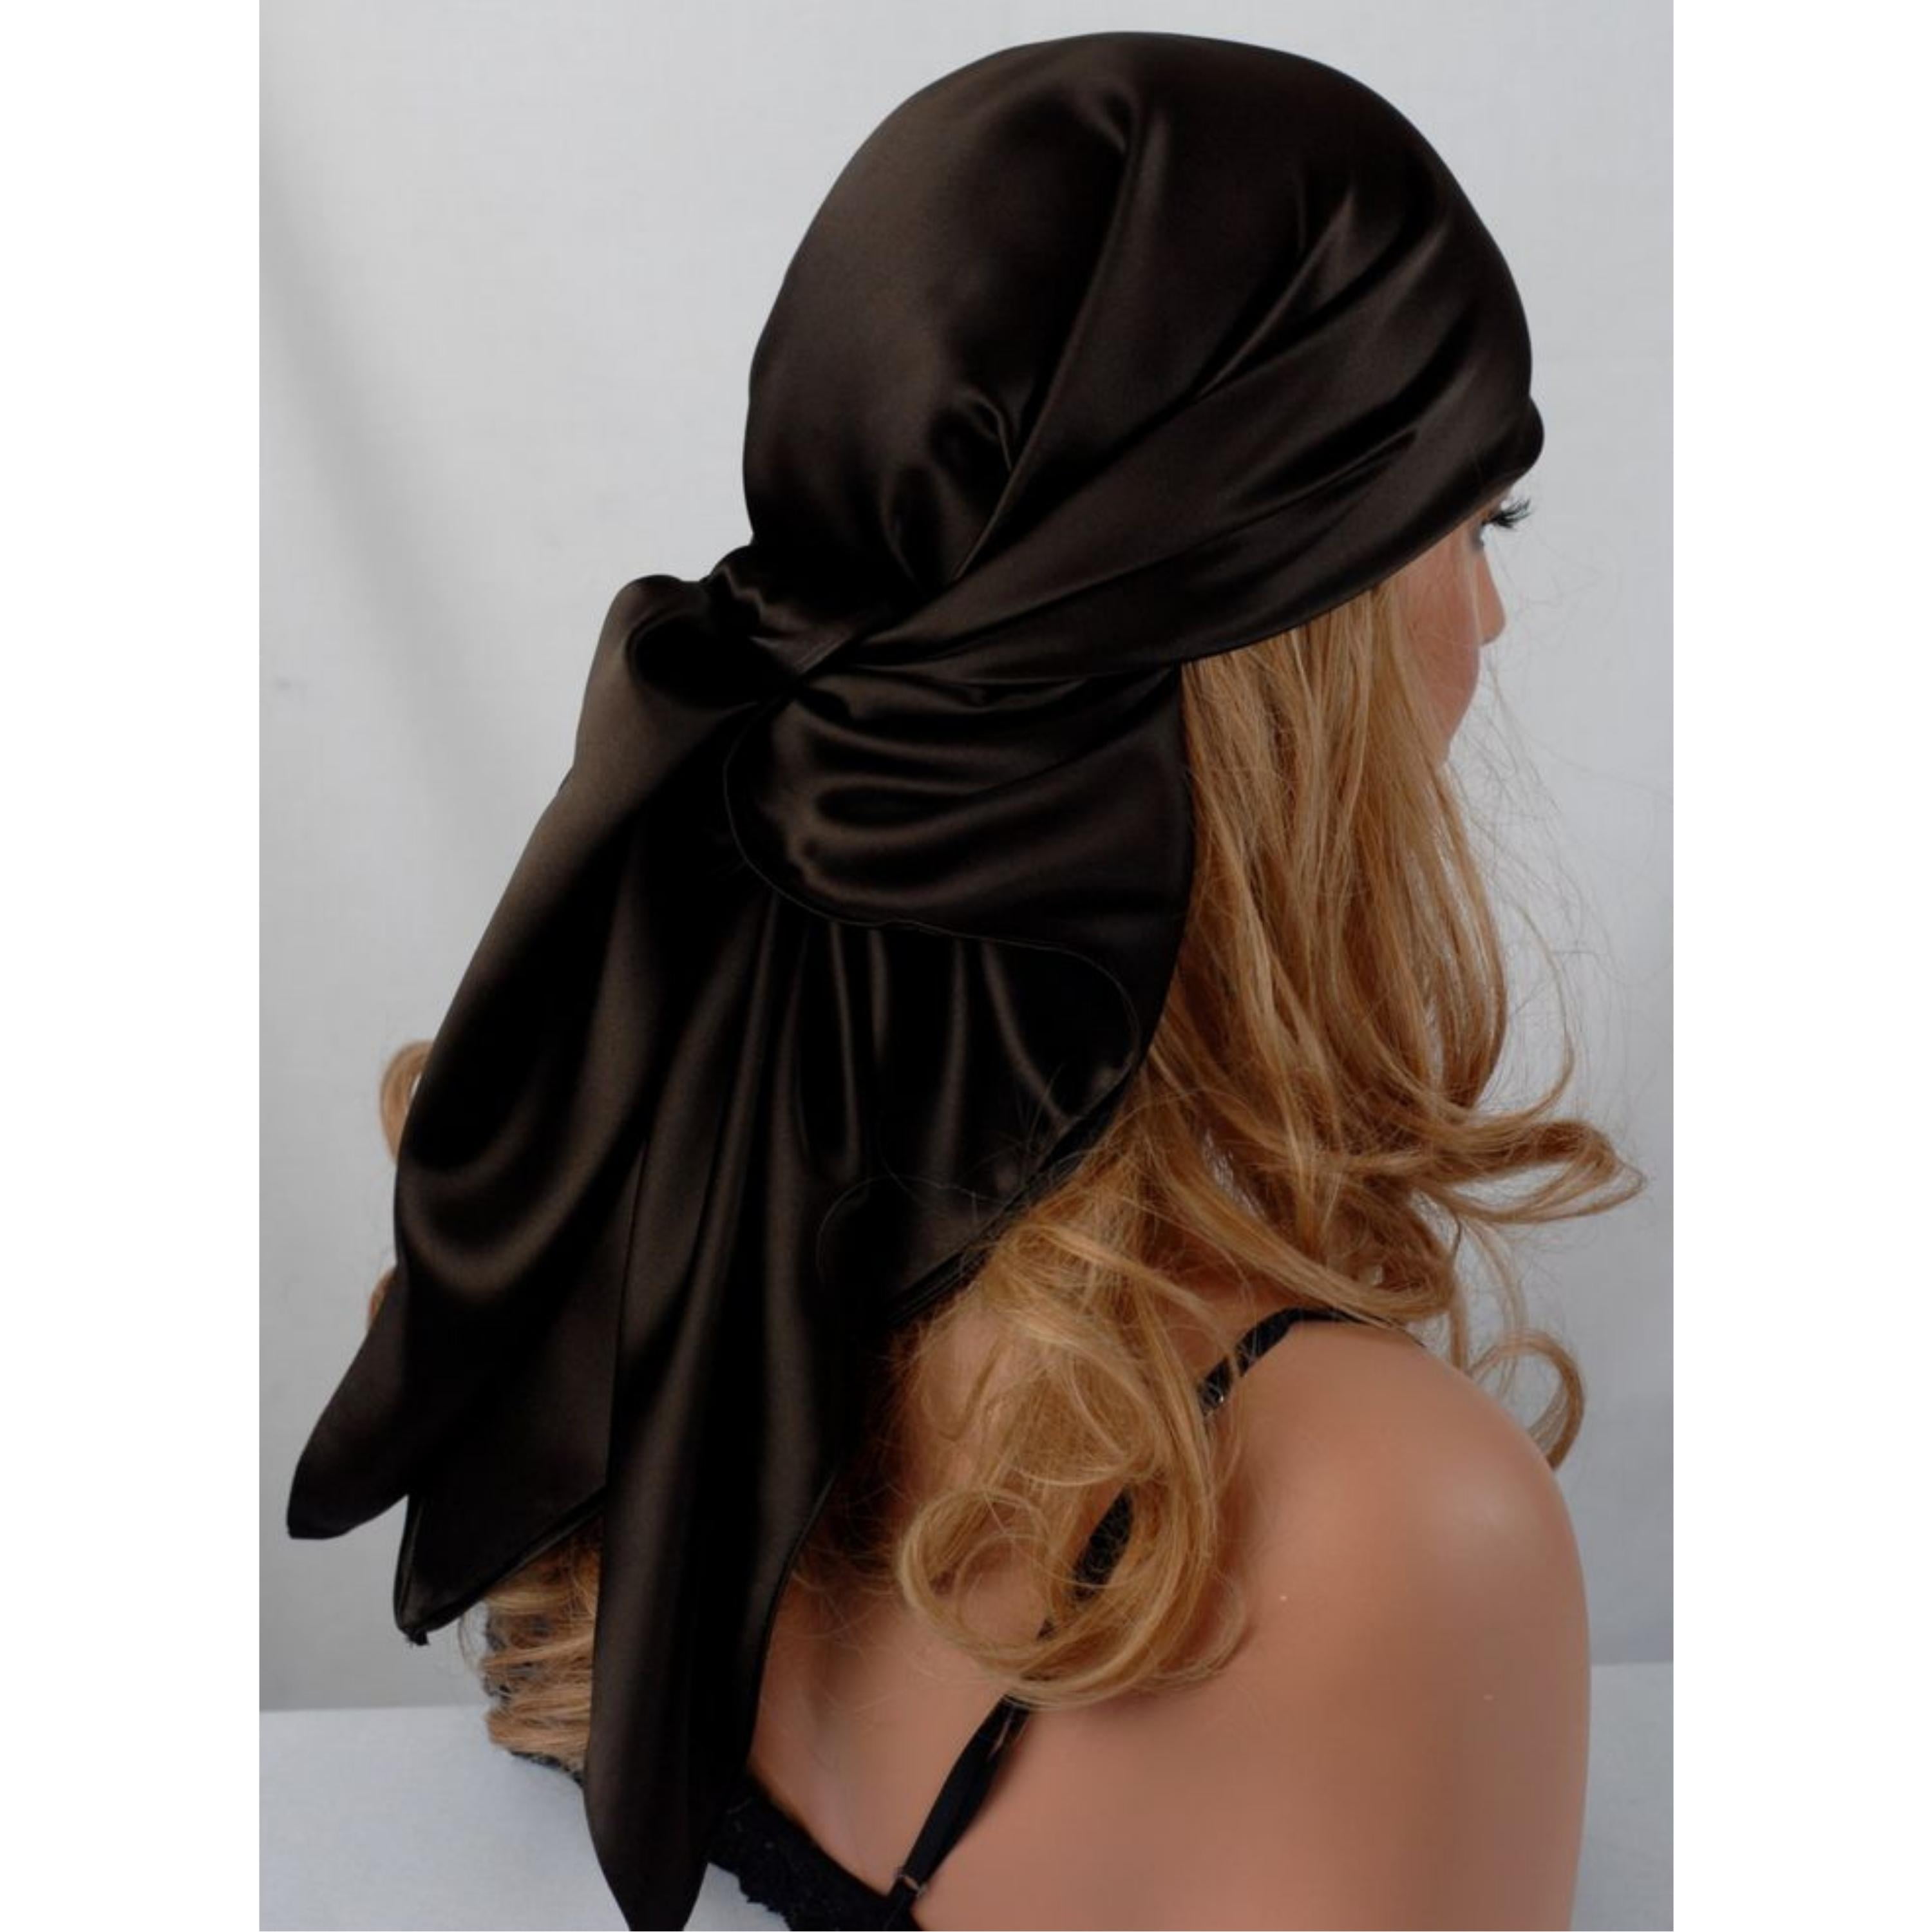 Swirly Curly Black Headwrap for Women, Satin & Silk Head Scarf, Fashion  Headband Turban for Thick Curly Hair 